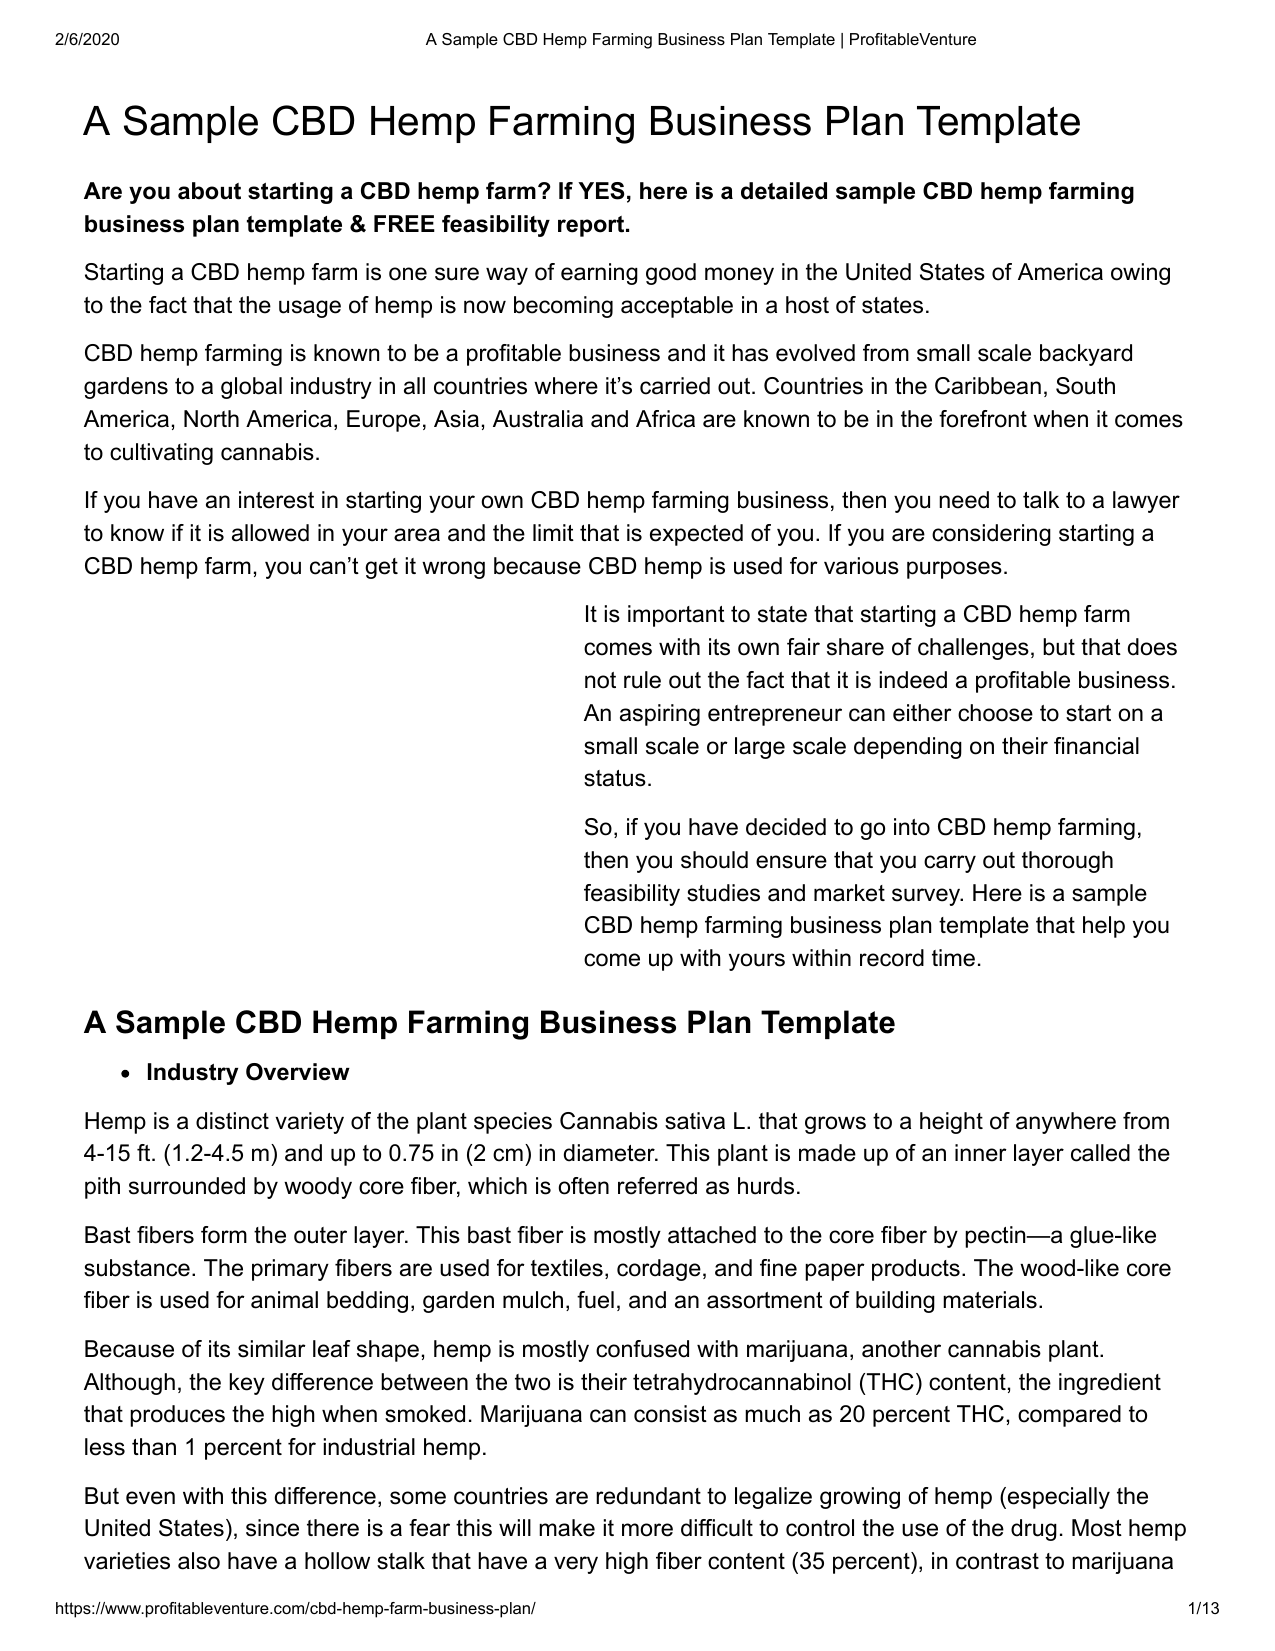 A Sample CBD Hemp Farming Business Plan Template Pertaining To Ranch Business Plan Template